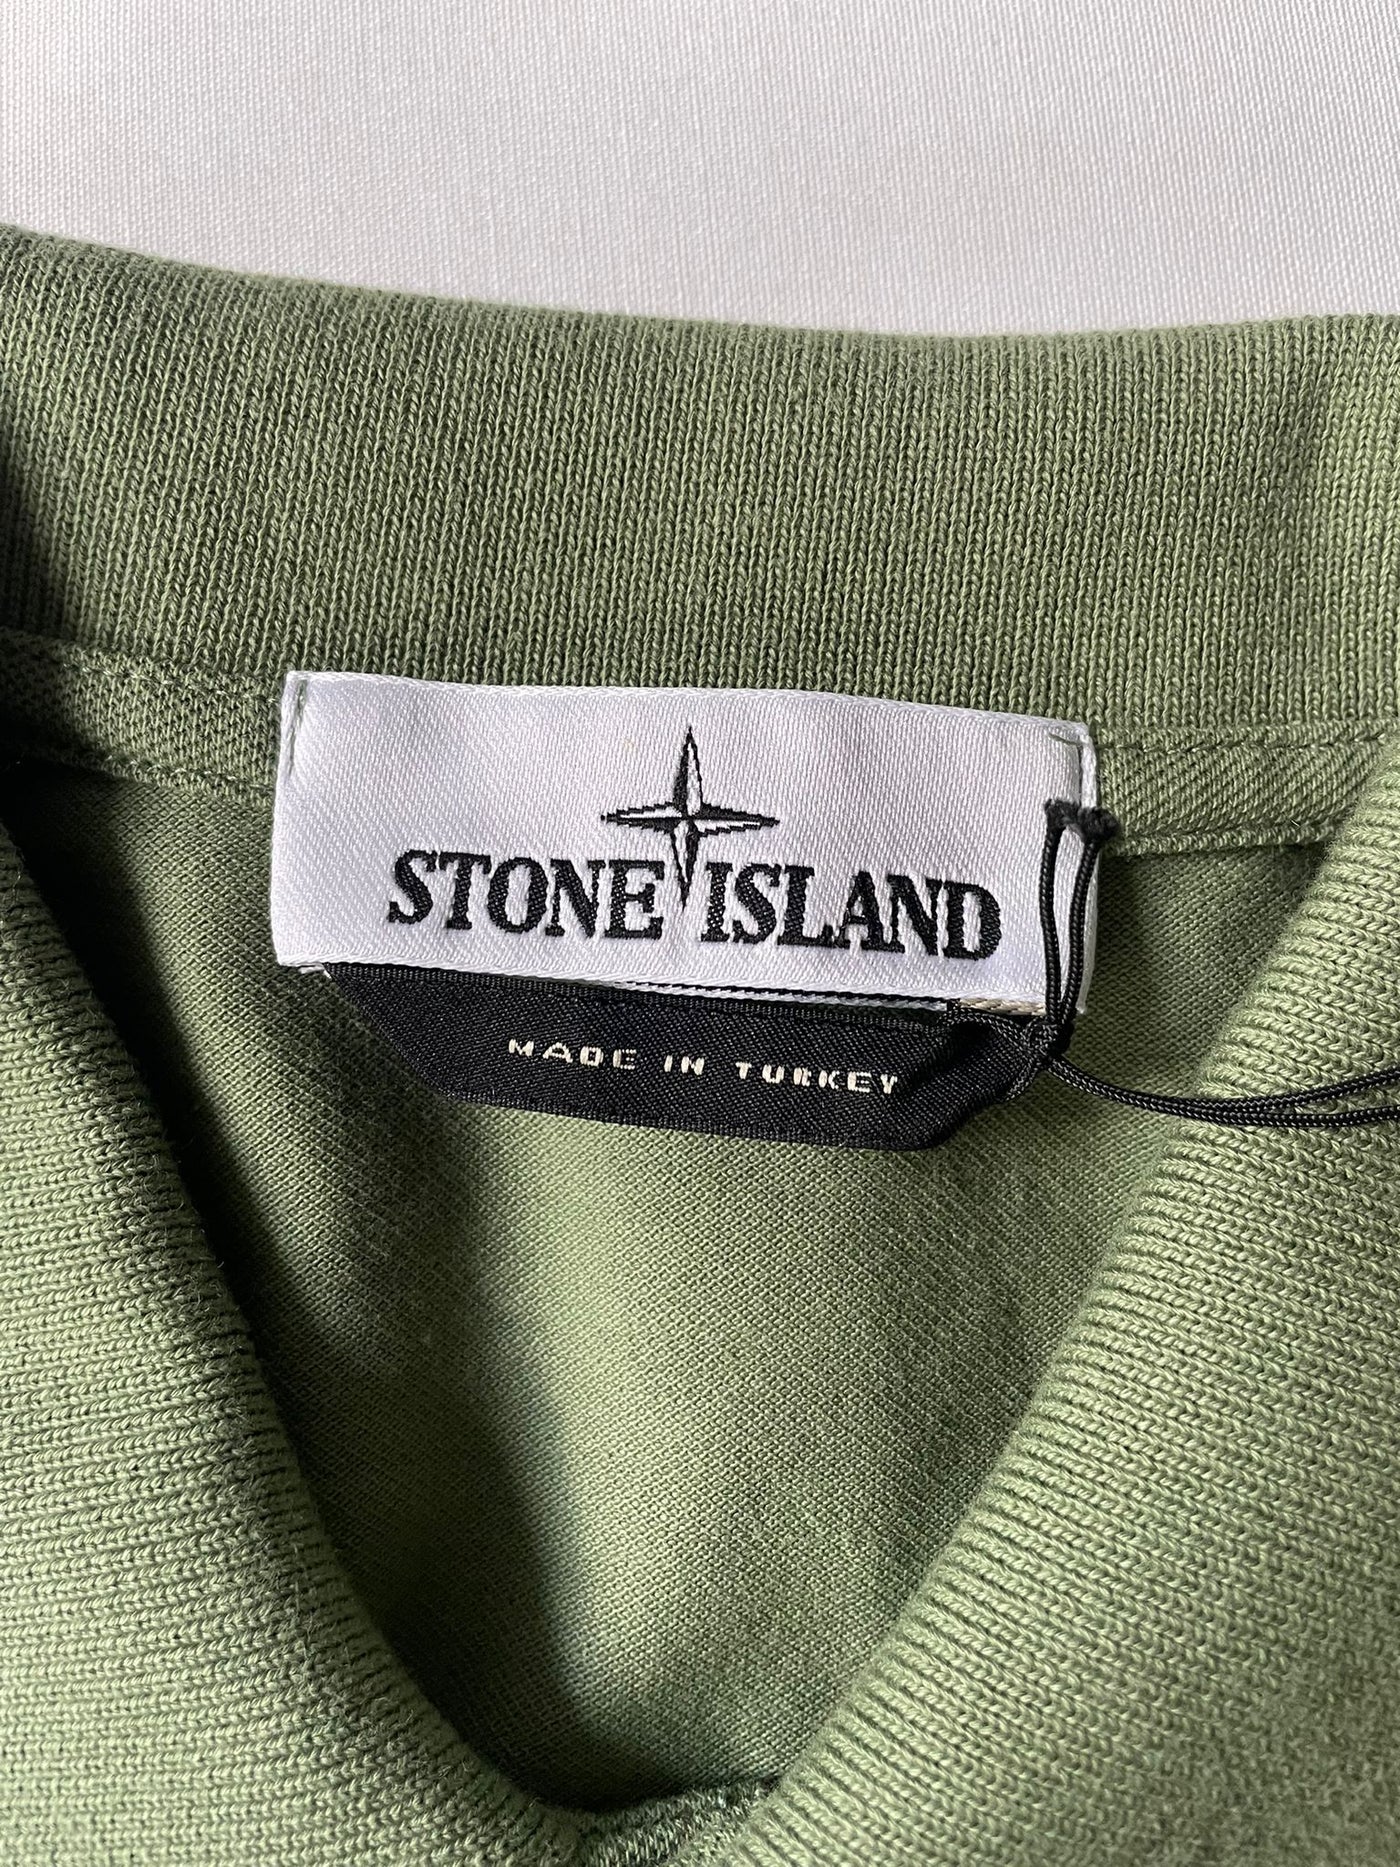 Stone Island Polo Green New (Large)